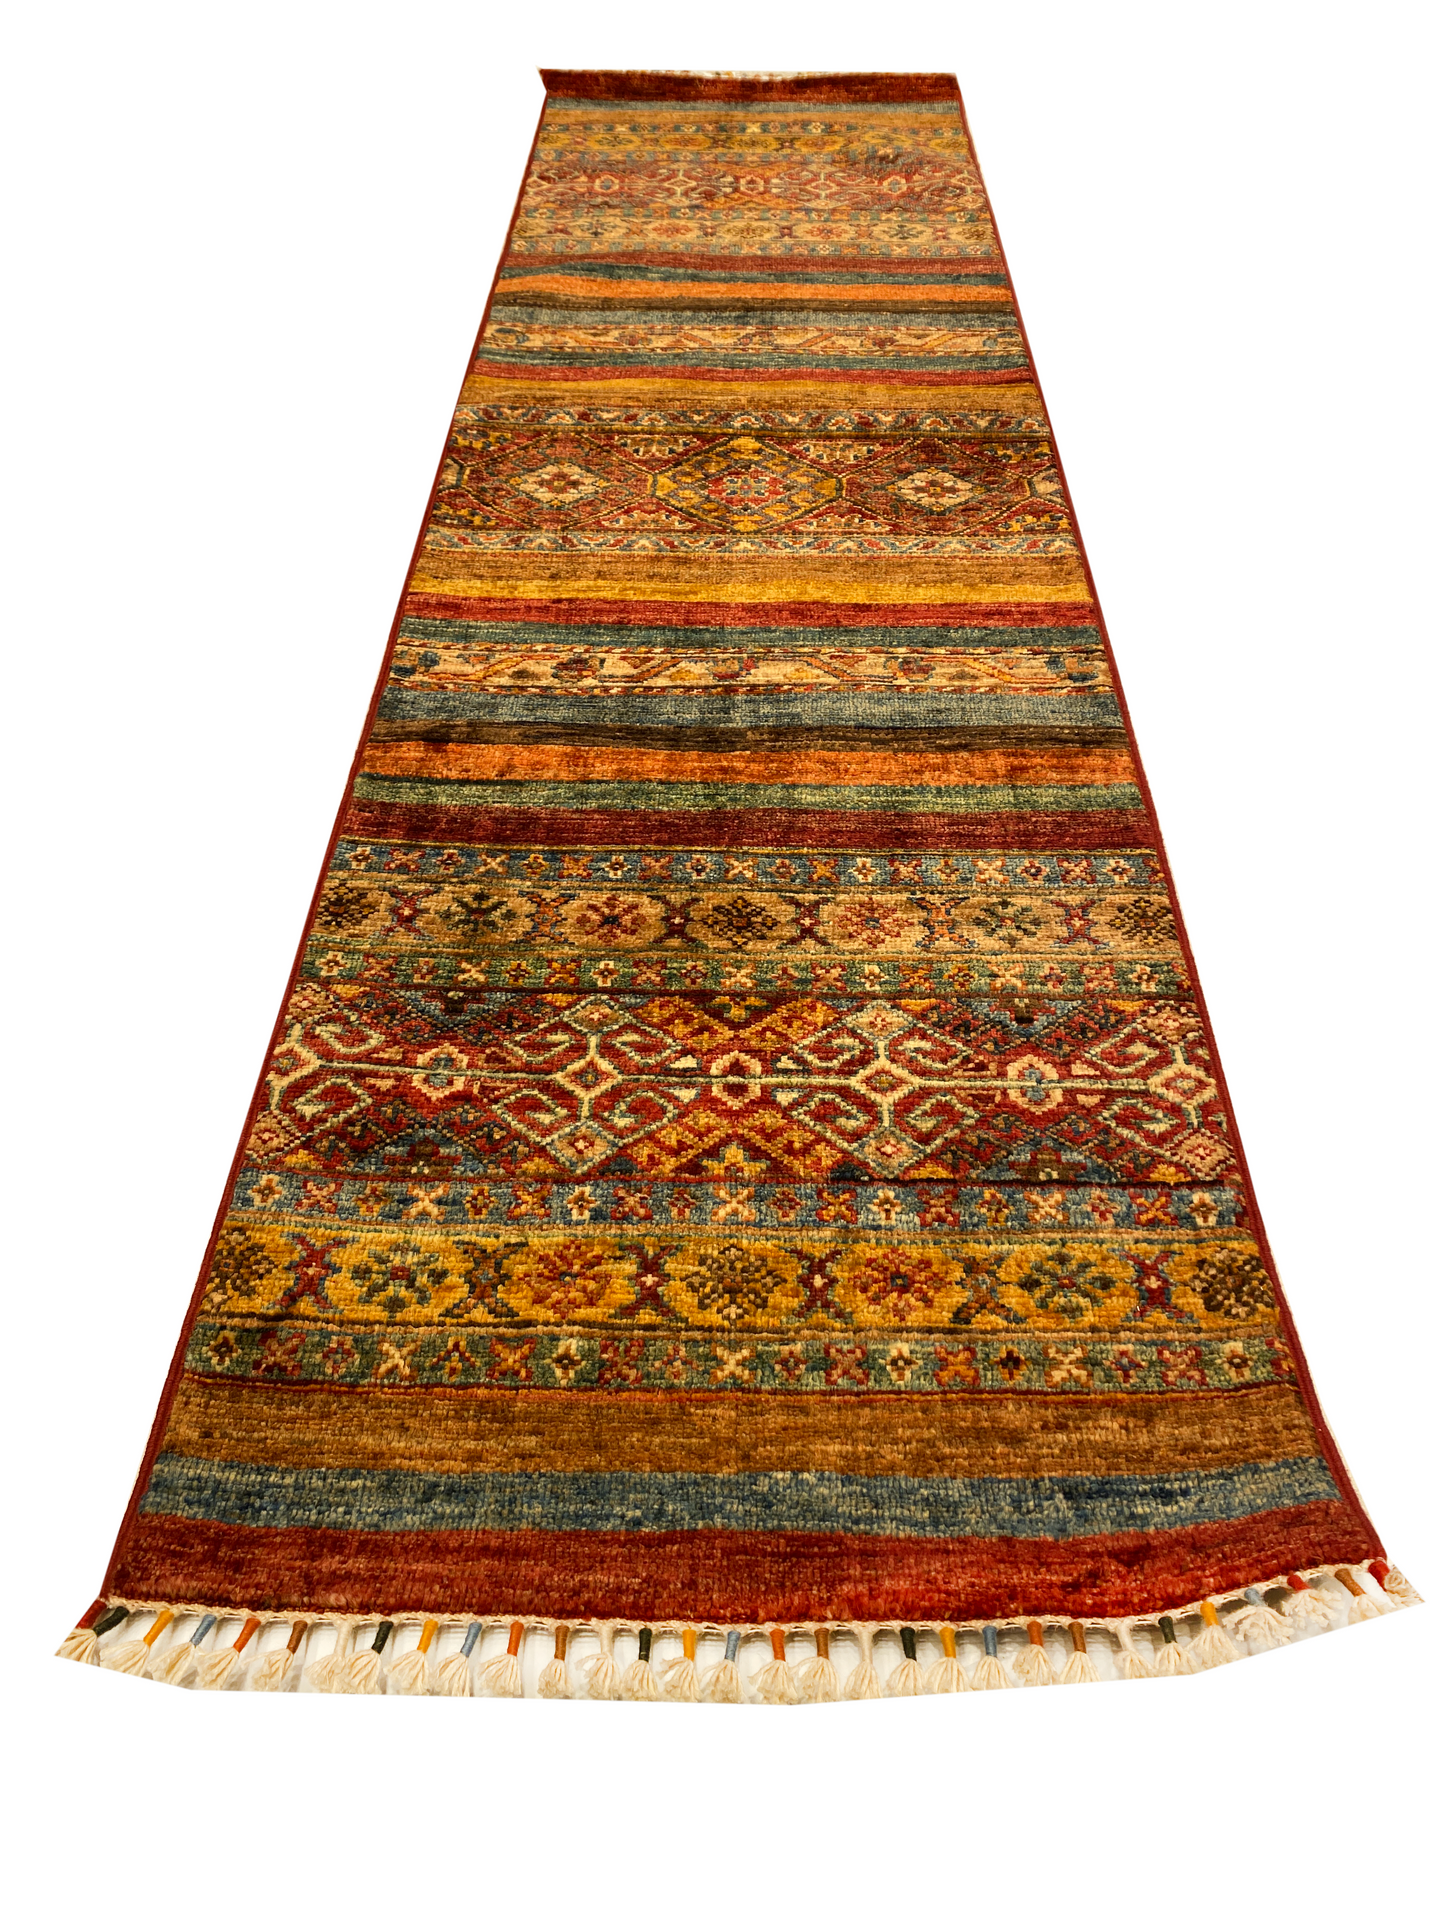 Şirvan Runner Carpet 198 X 54 cm